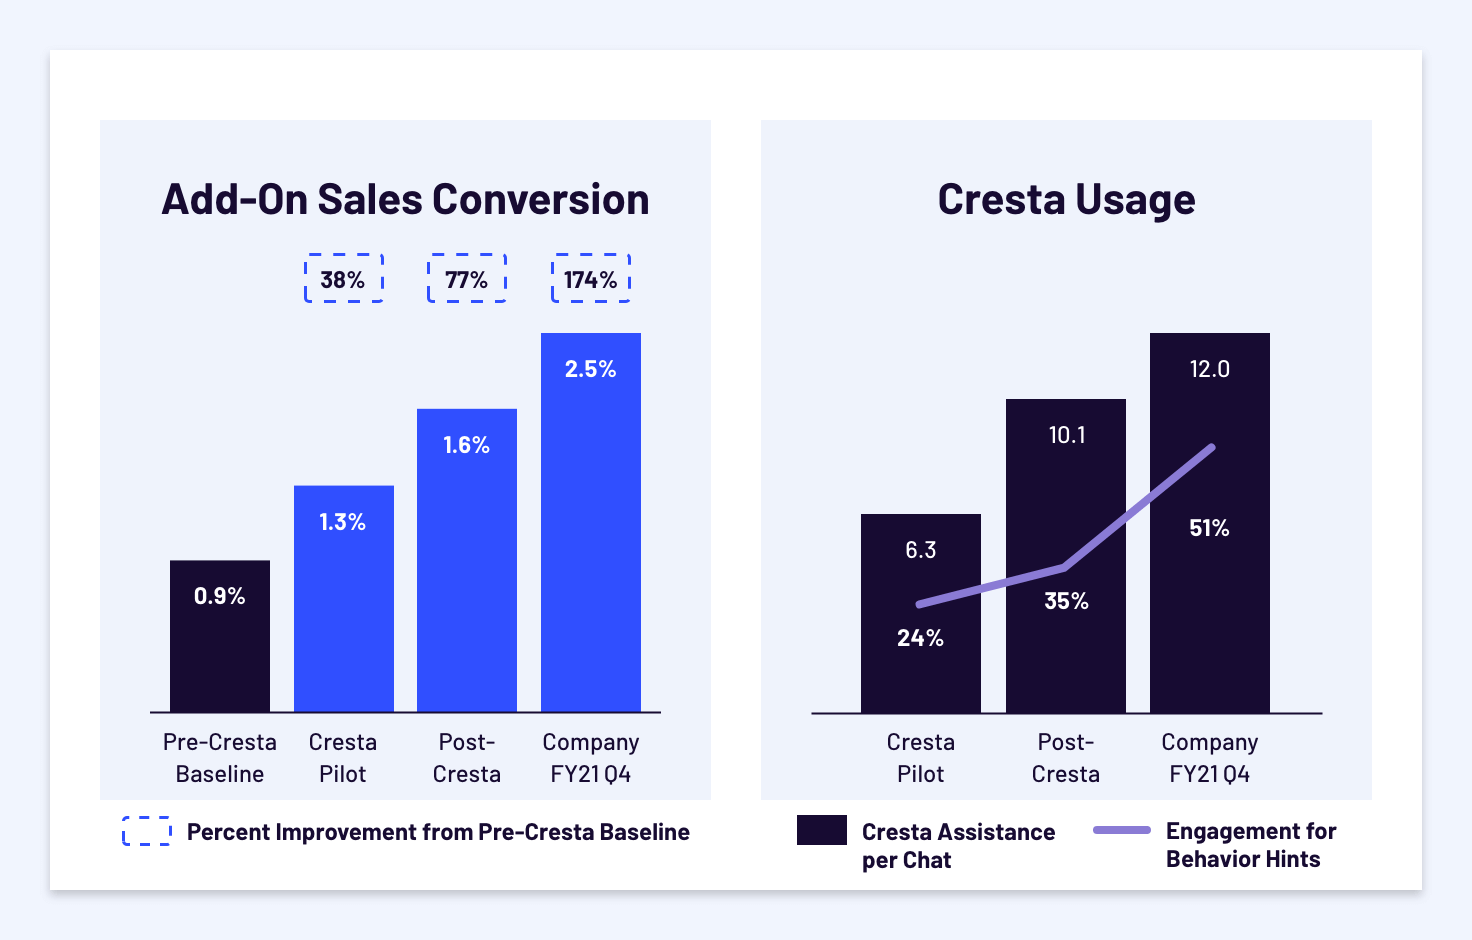 Add-On Sales Conversion